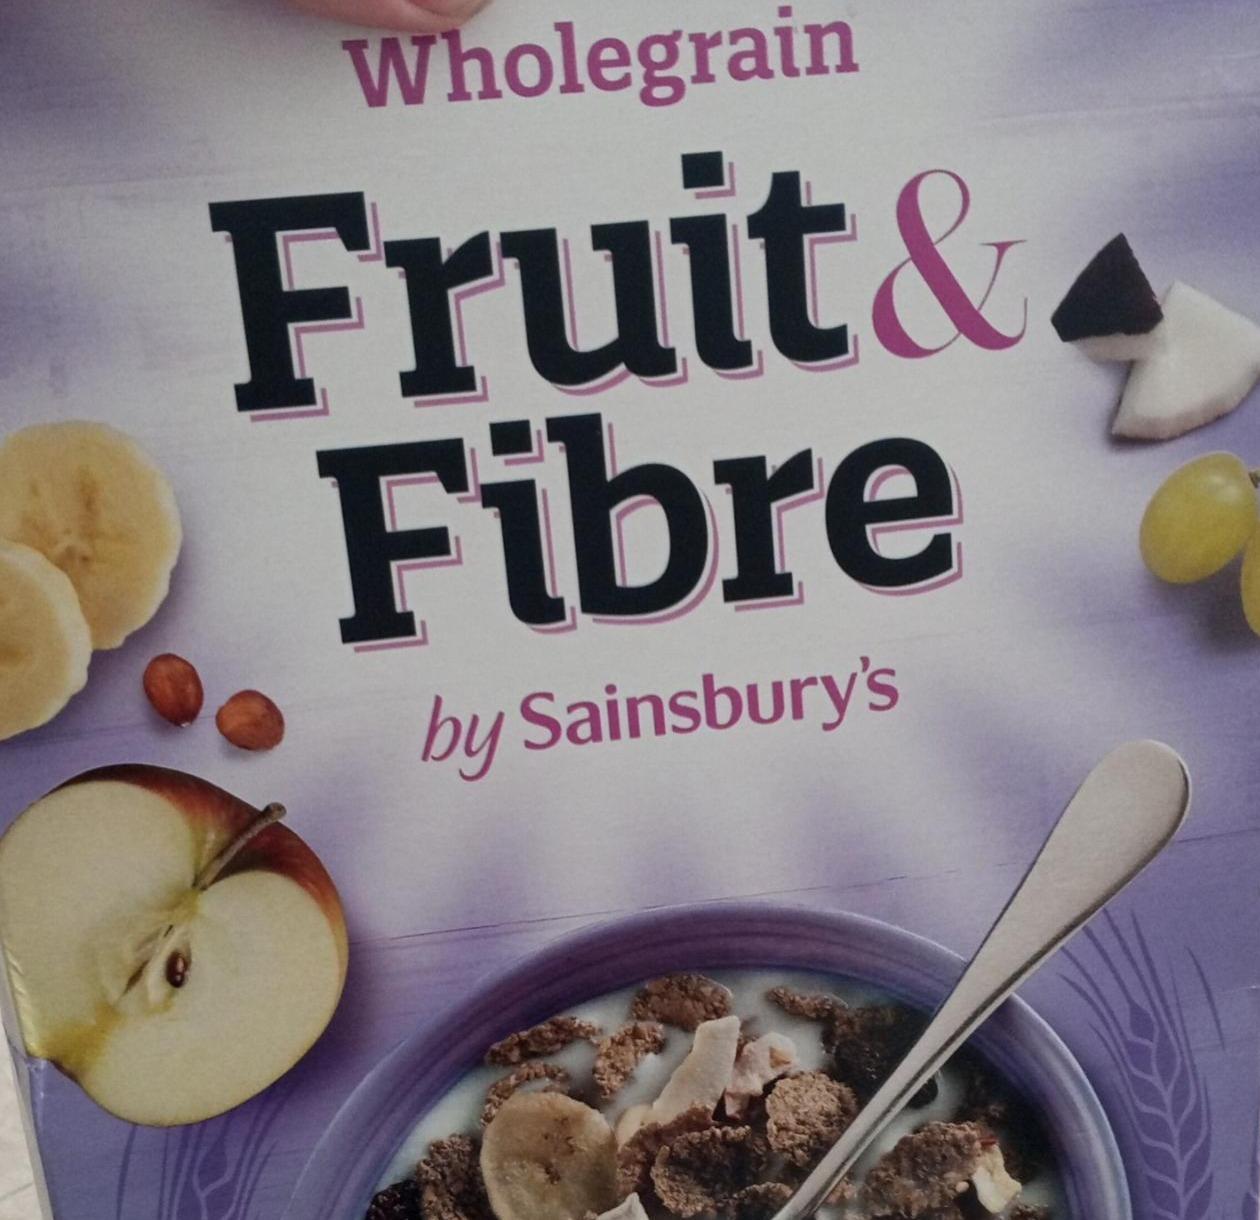 Фото - Завтрак сухой Fruit & Fibre by Sainsbury's